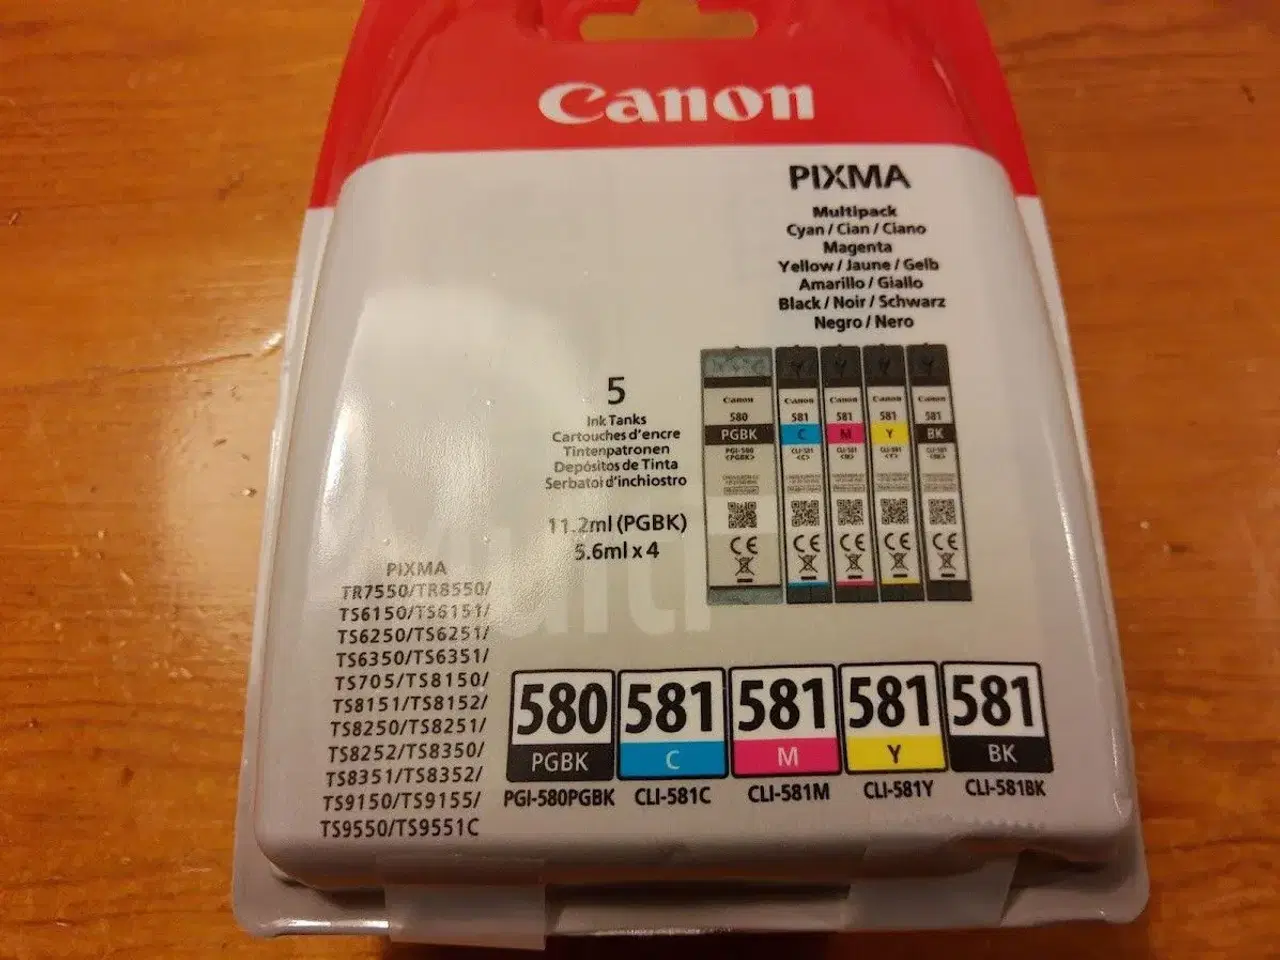 Billede 1 - Canon toner til PIXMA printer. Serie 580-581